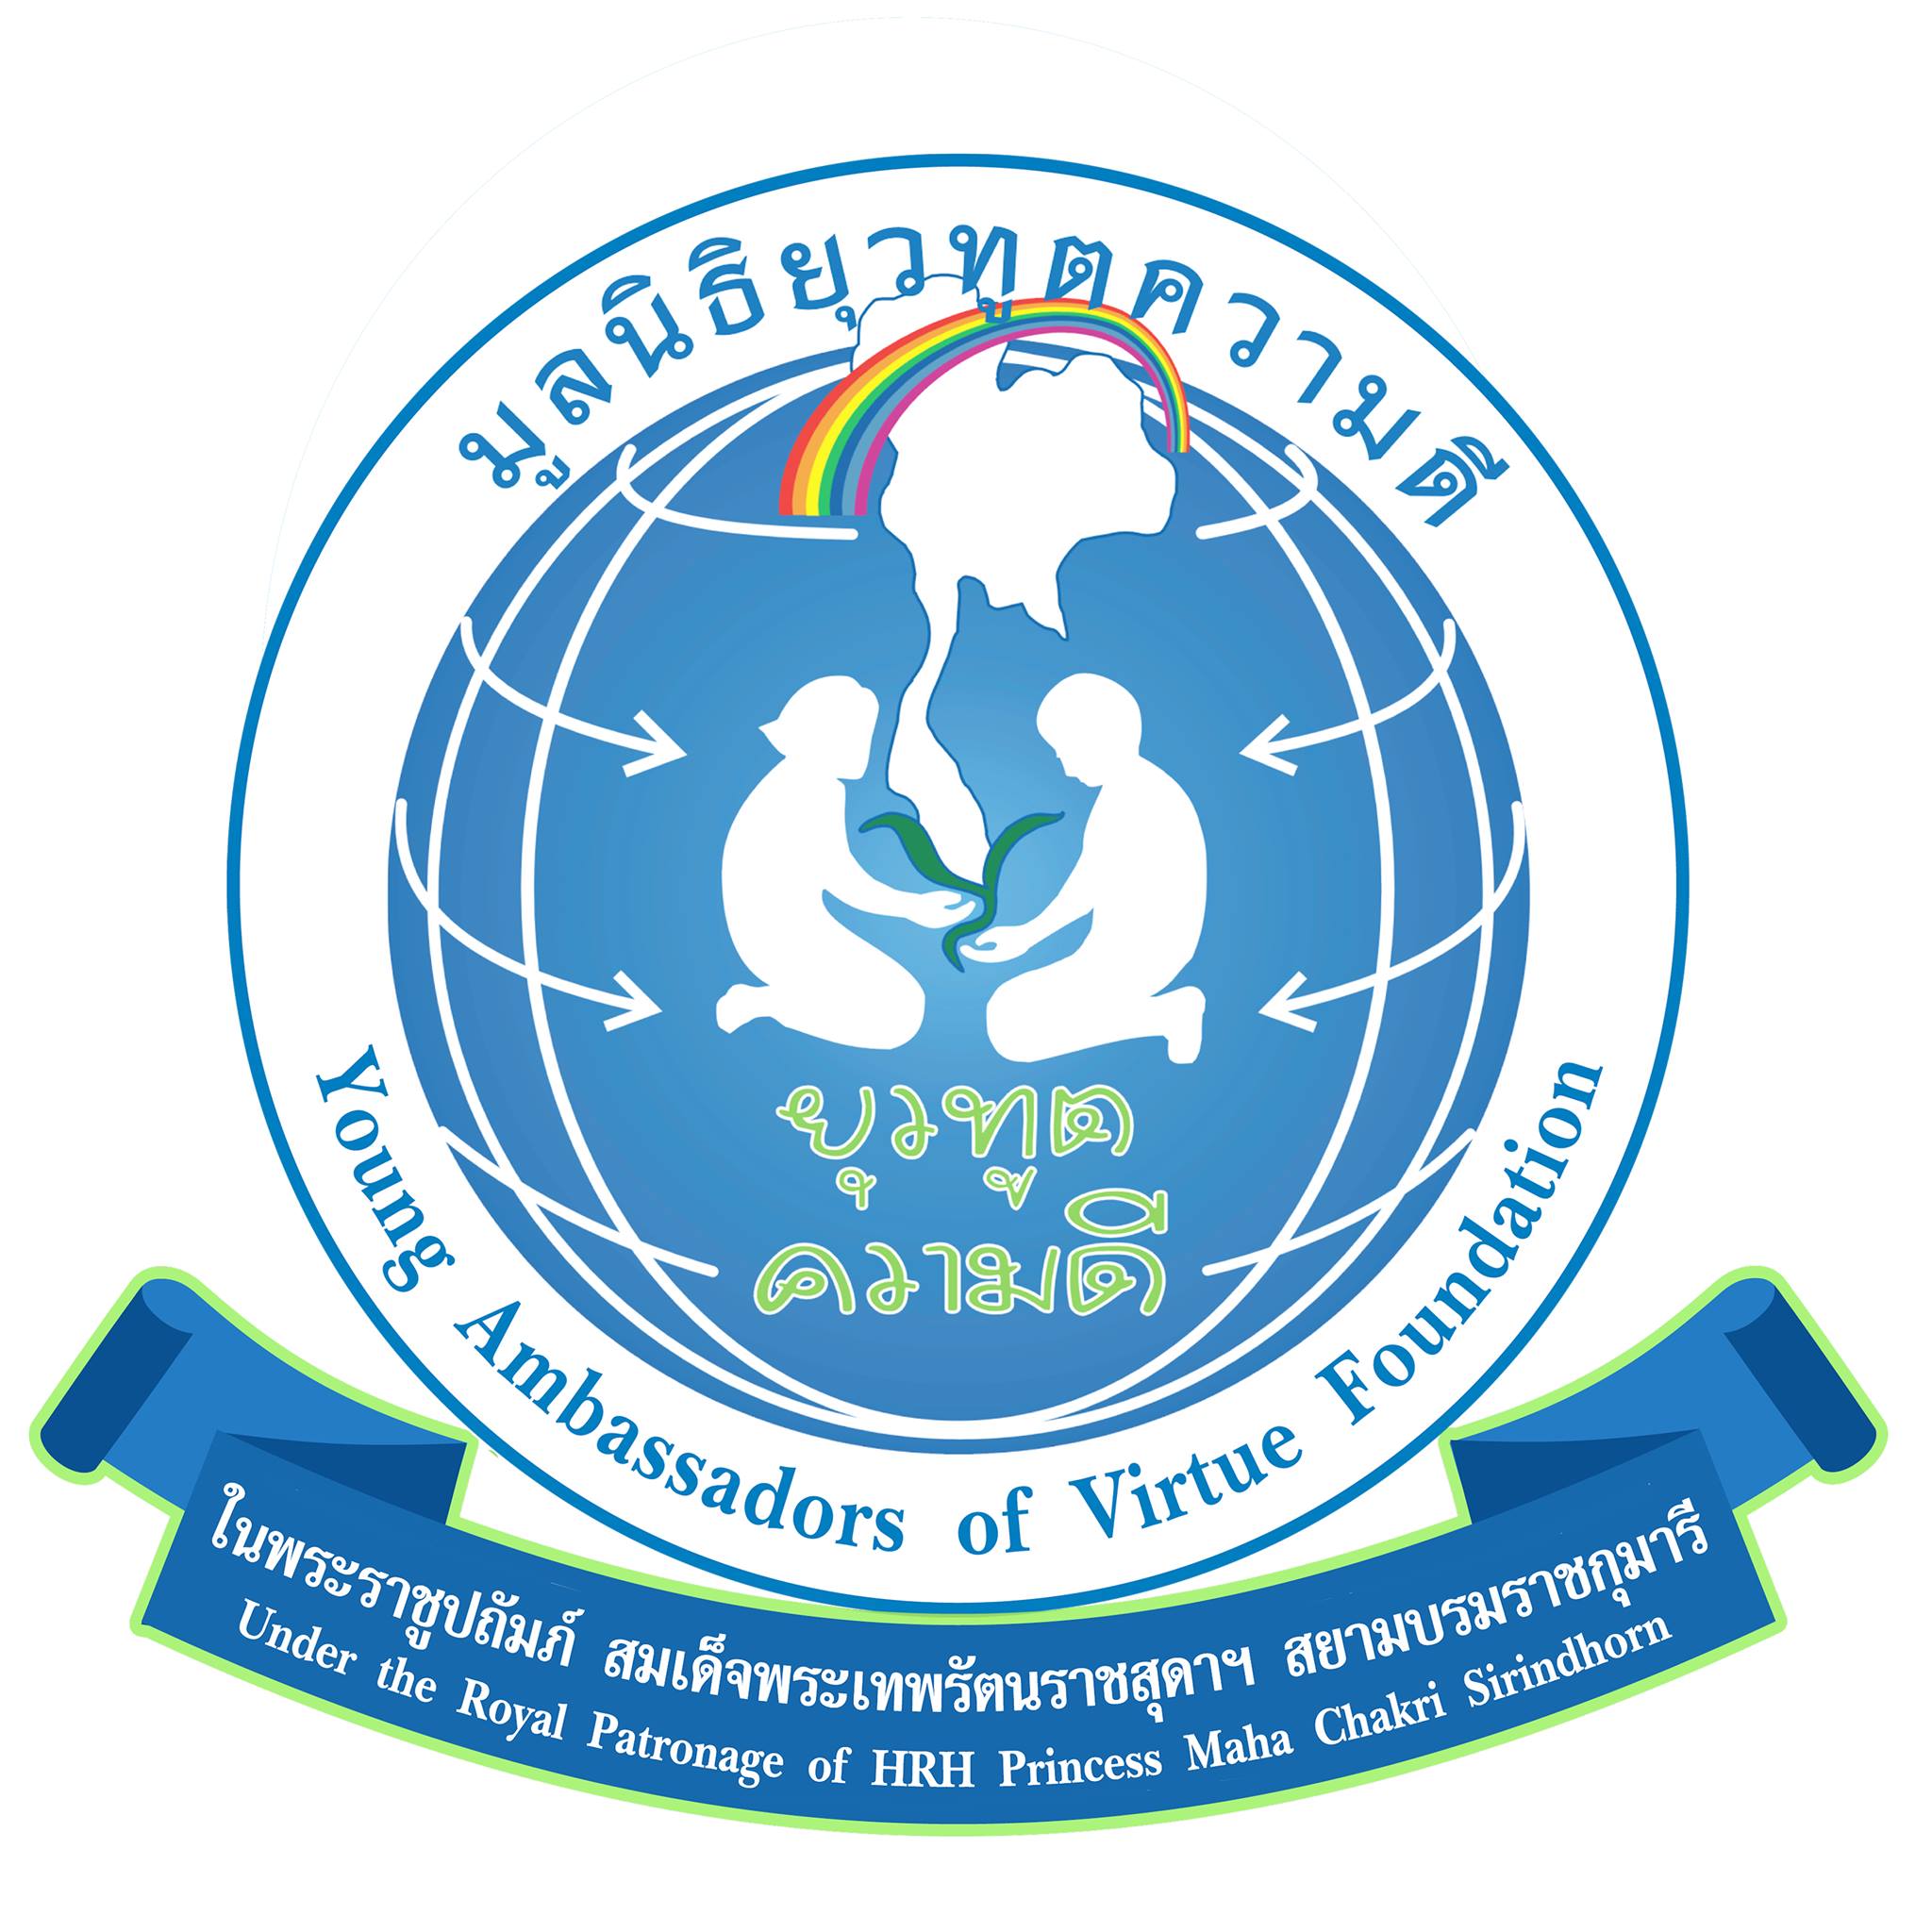 The Young Ambassadors of Virtue Foundation Logo